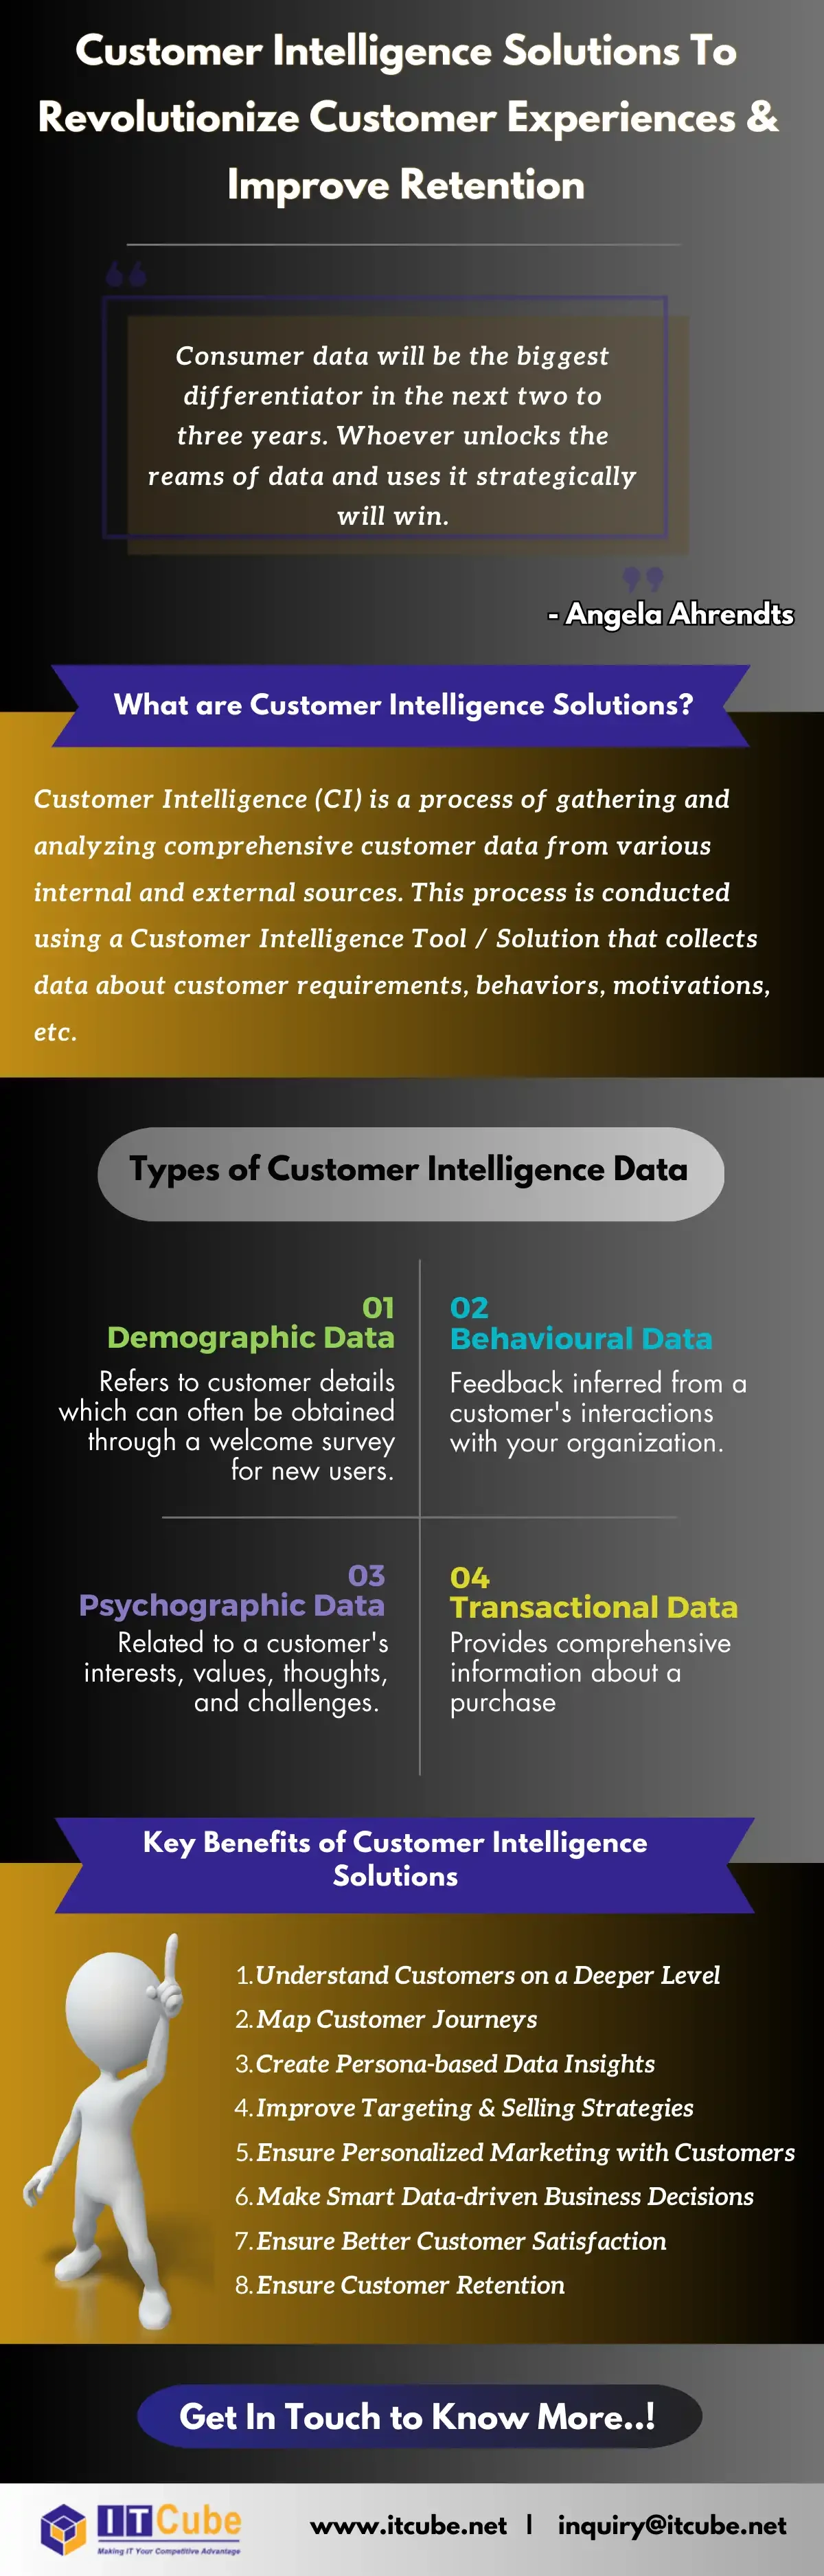 customer-intelligence-solutions-to-revolutionize Image